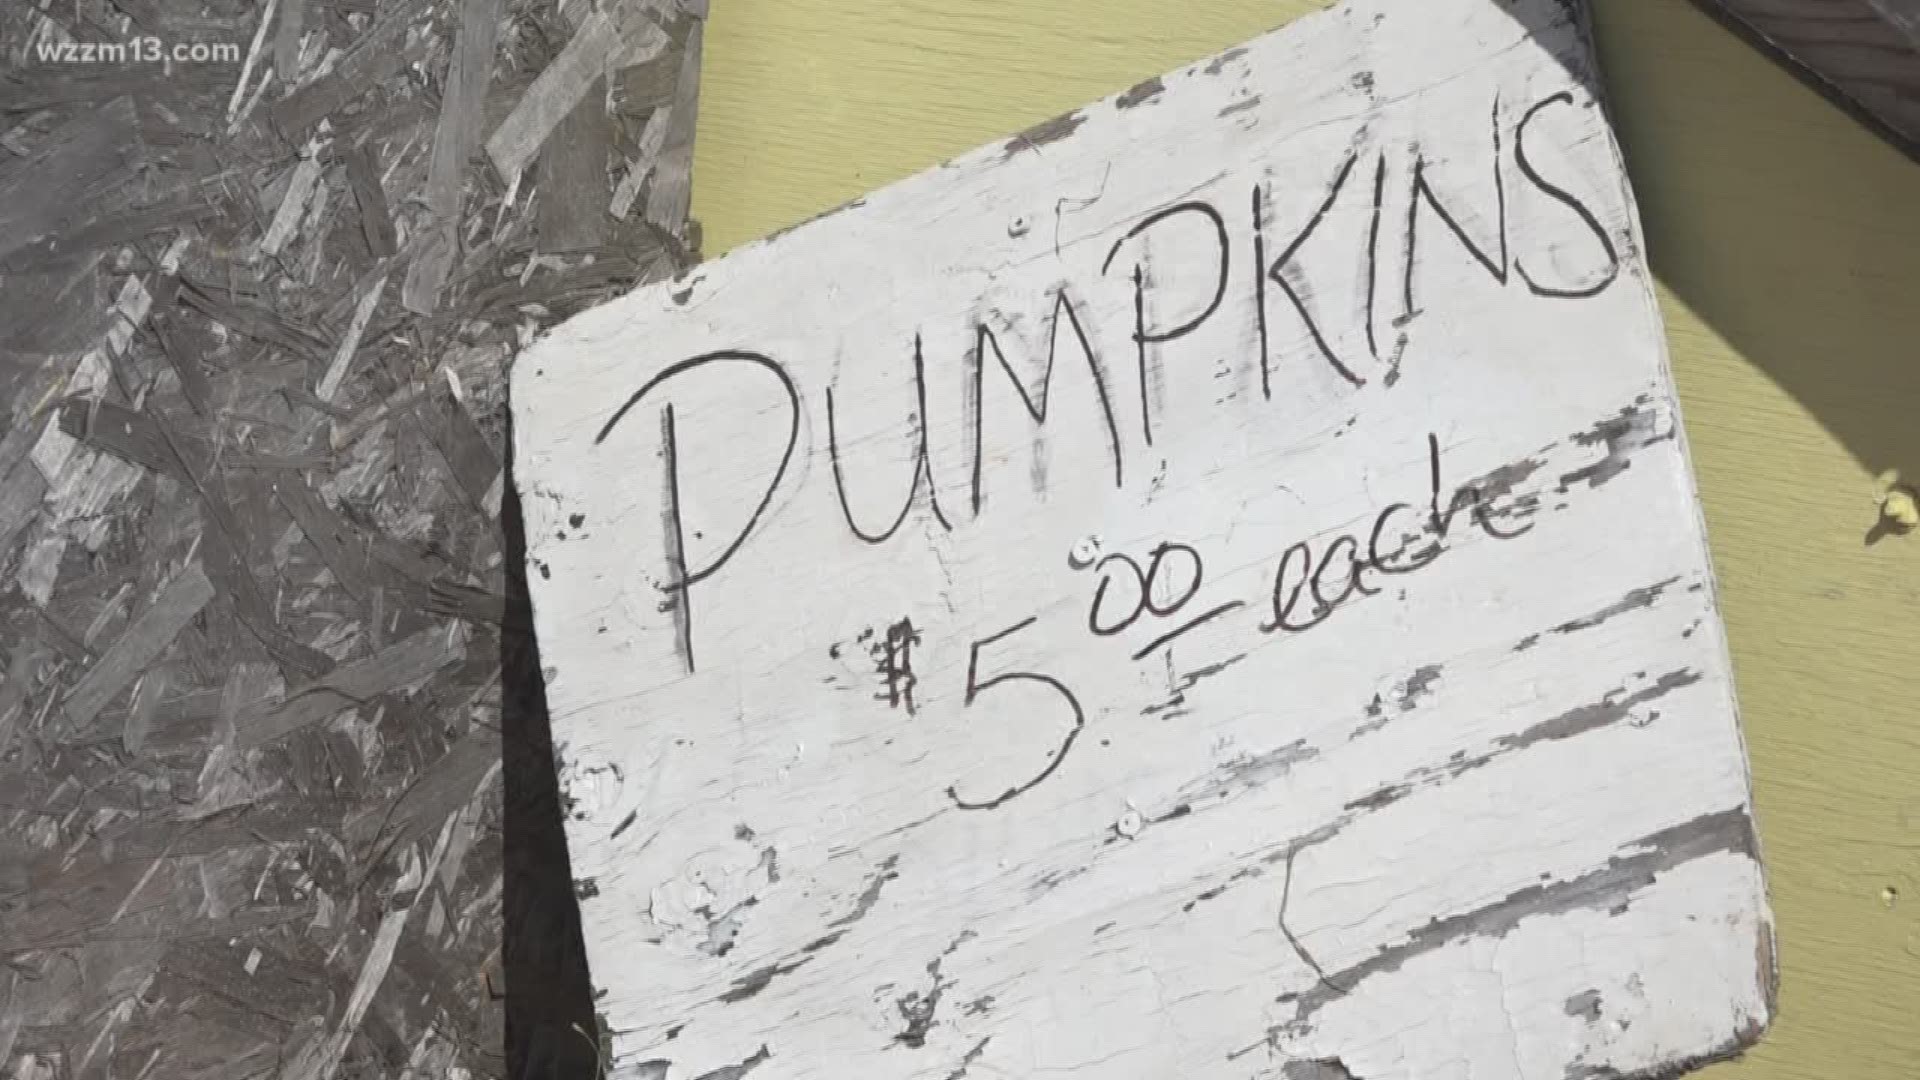 Six-year-old's pumpkin fundraiser generates $23K